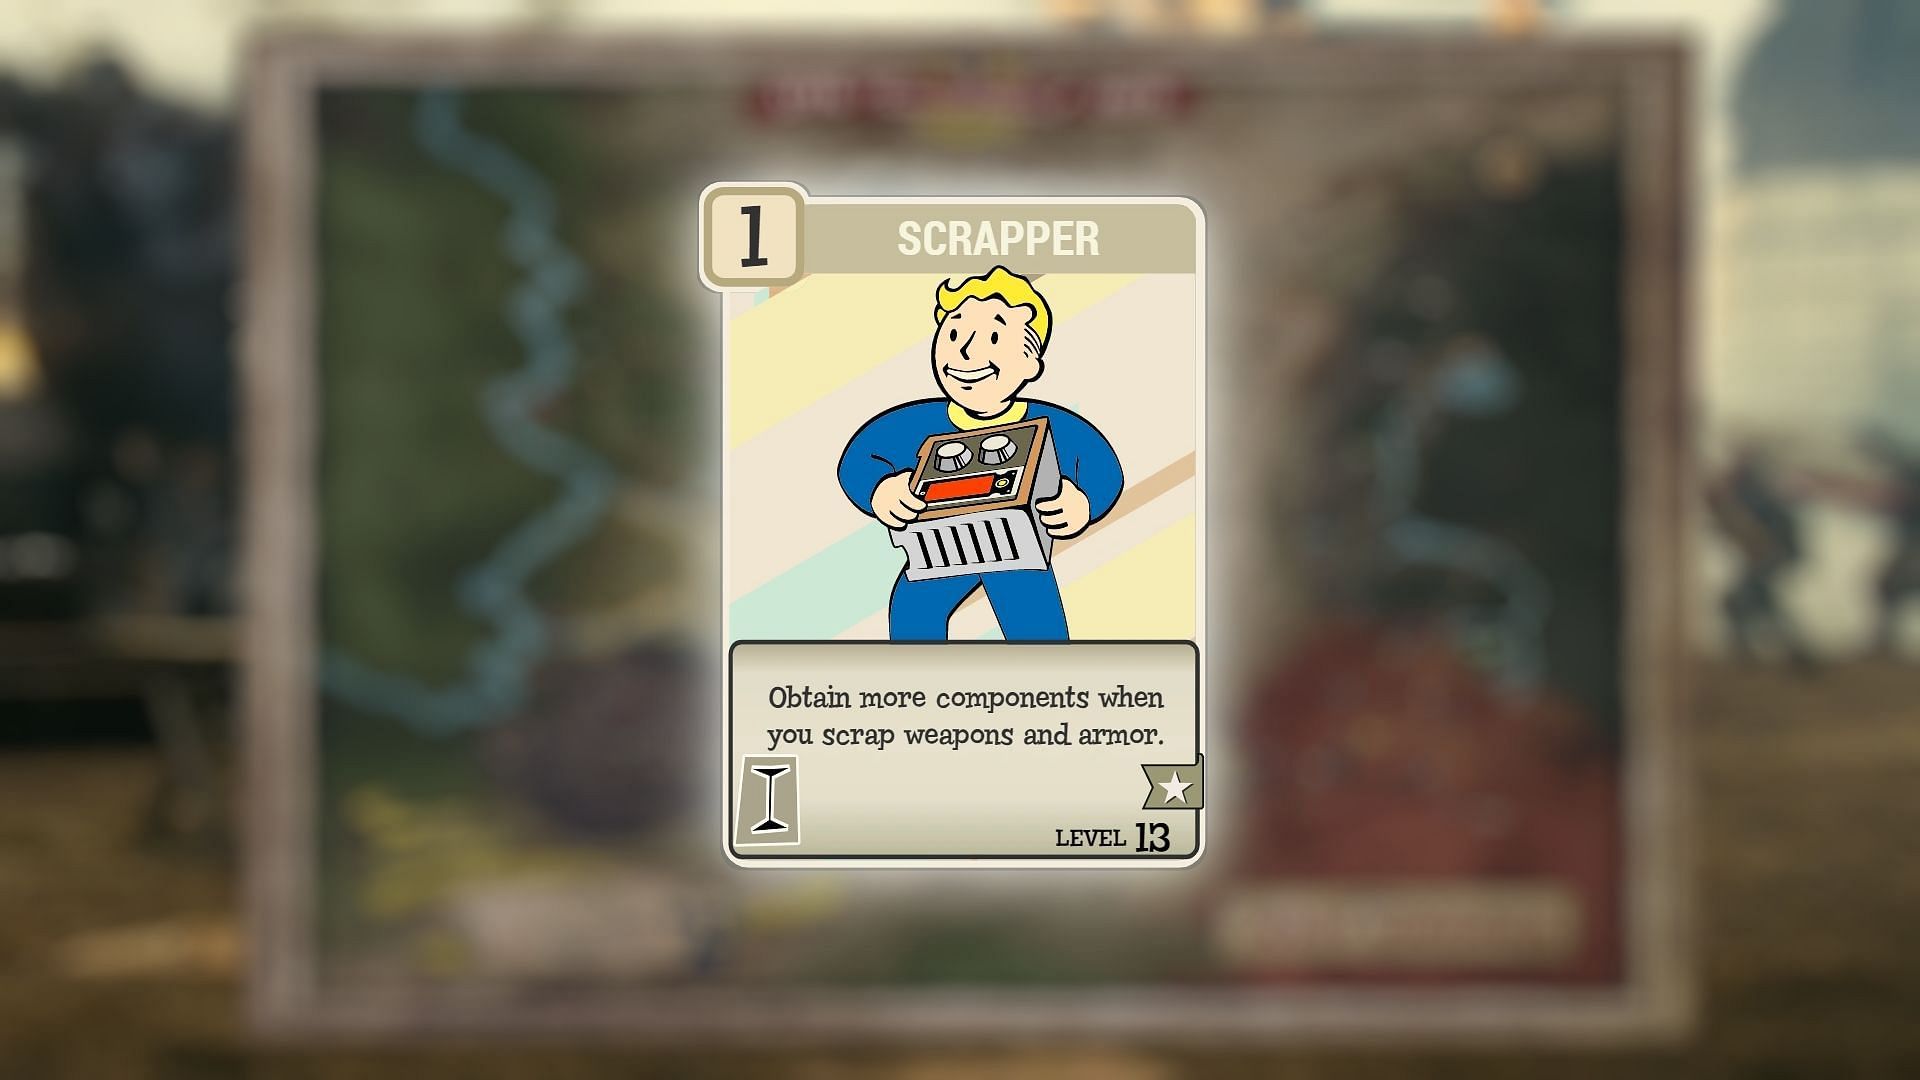 The Scrapper perk in-game (Image via Bethesda Game Studios)